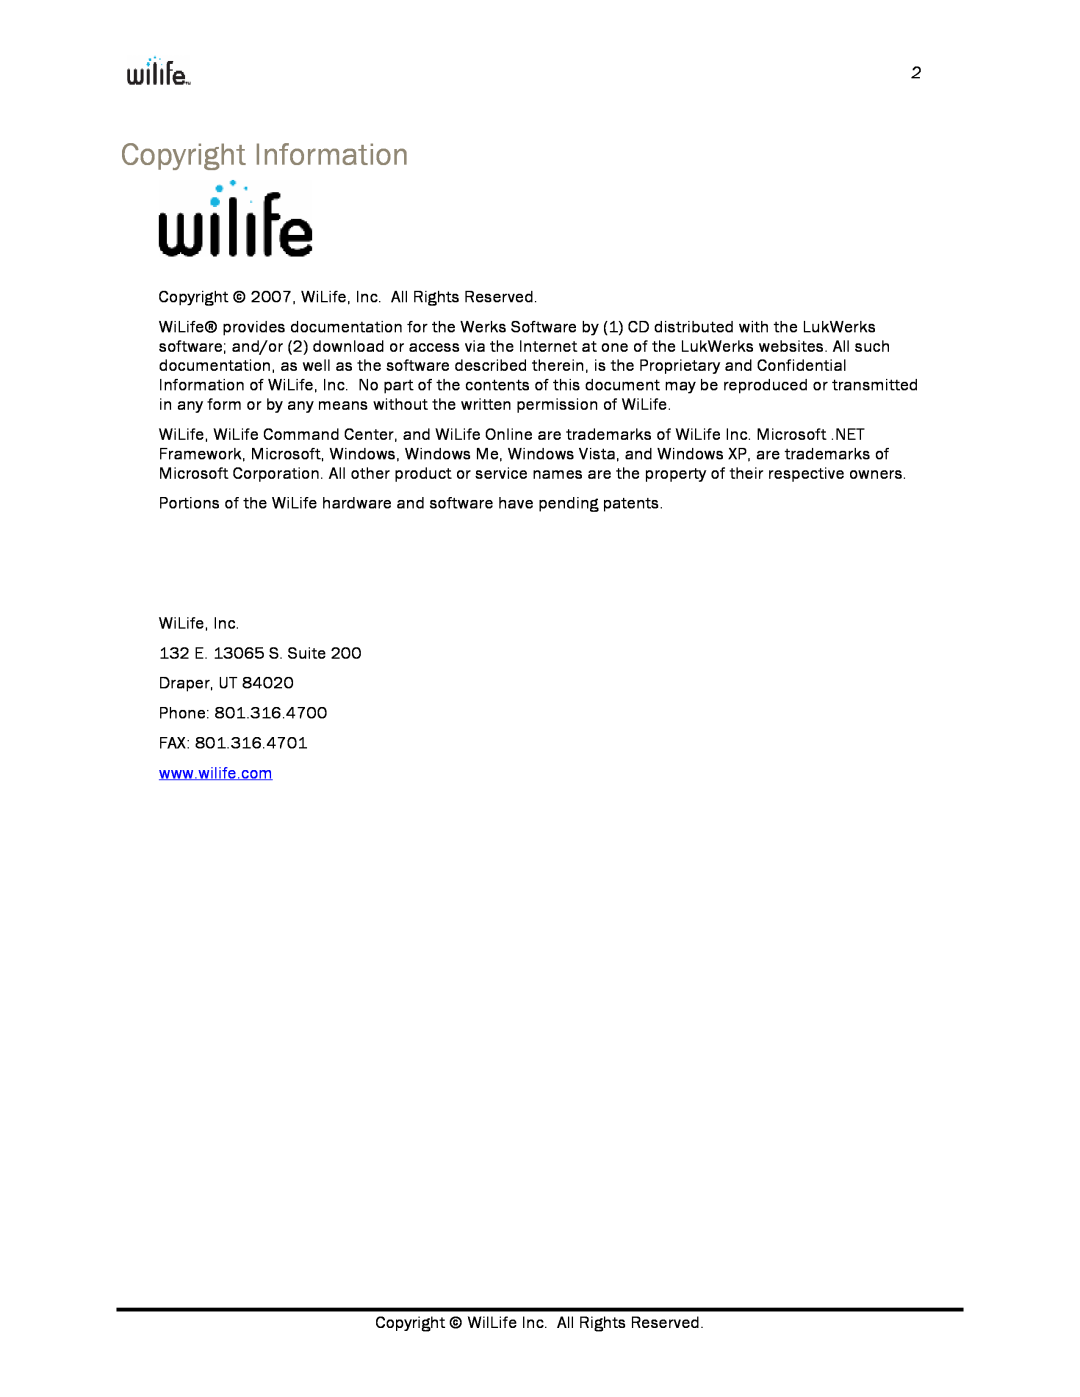 WiLife V2.0 manual Copyright Information 